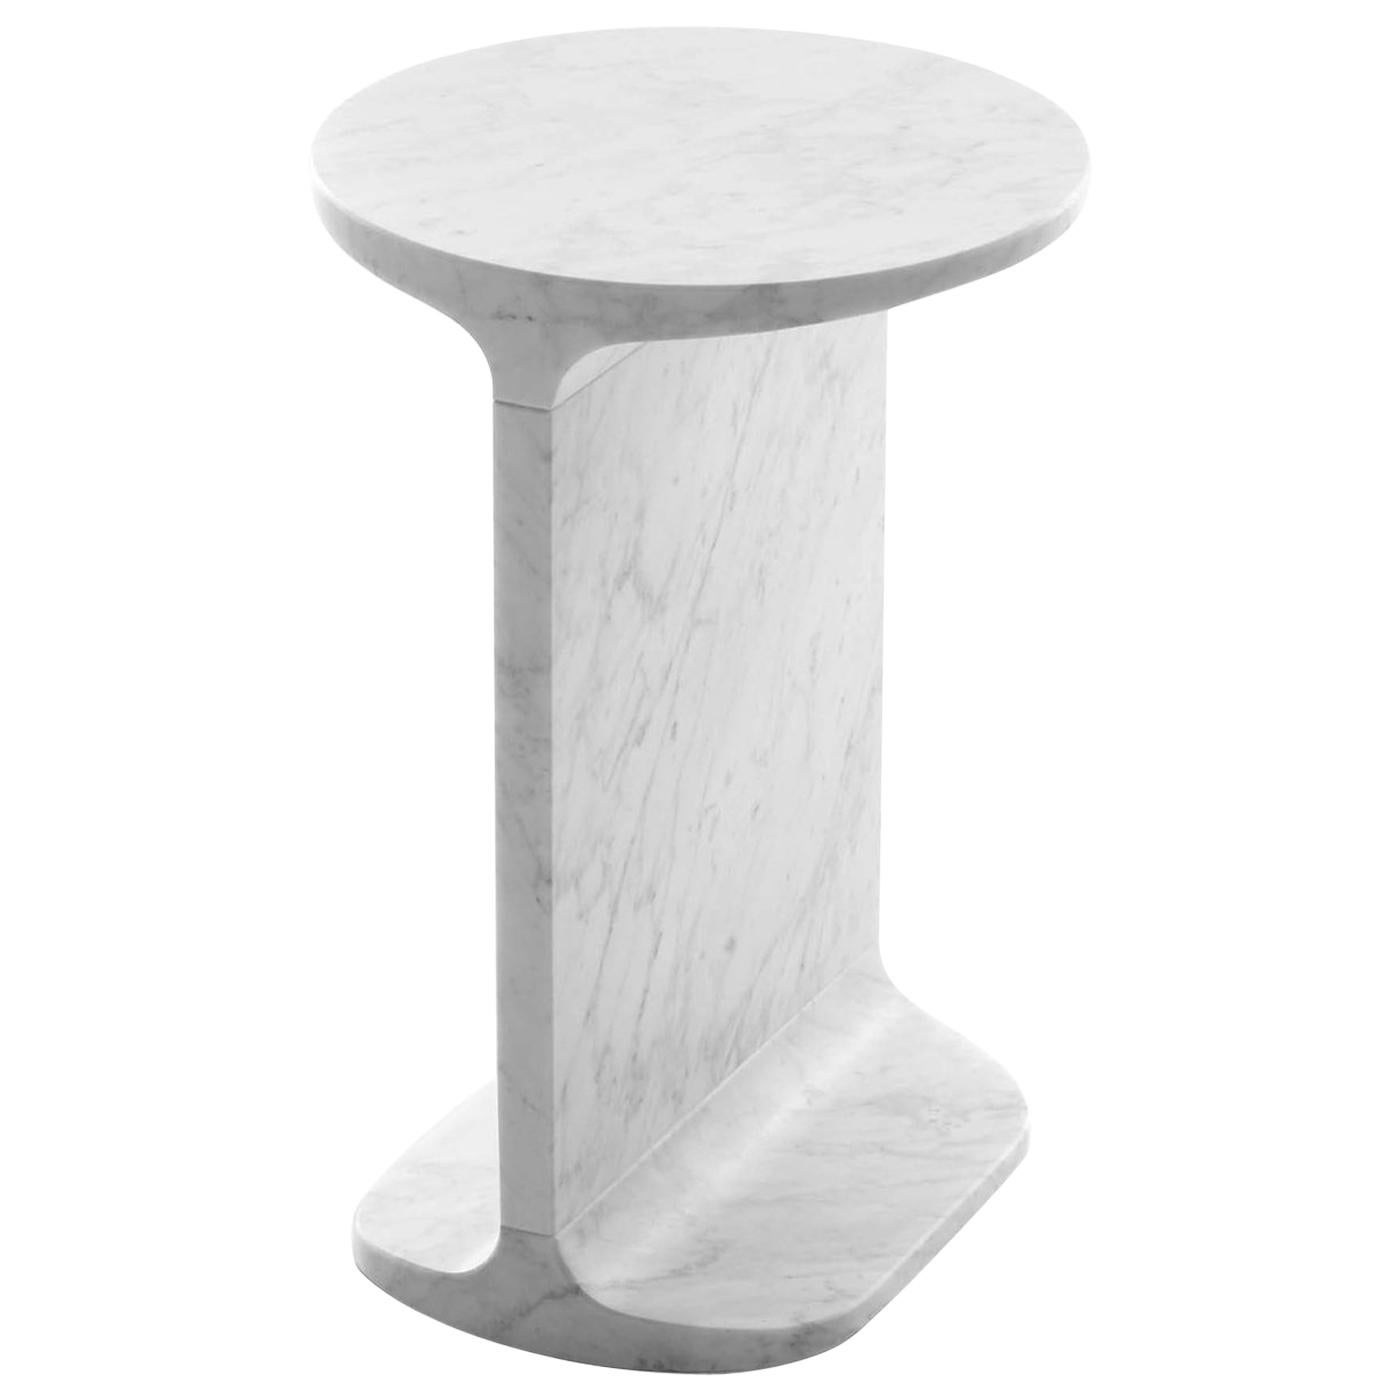 White Ipe Tondo Side Table, Design James Irvine, 2009